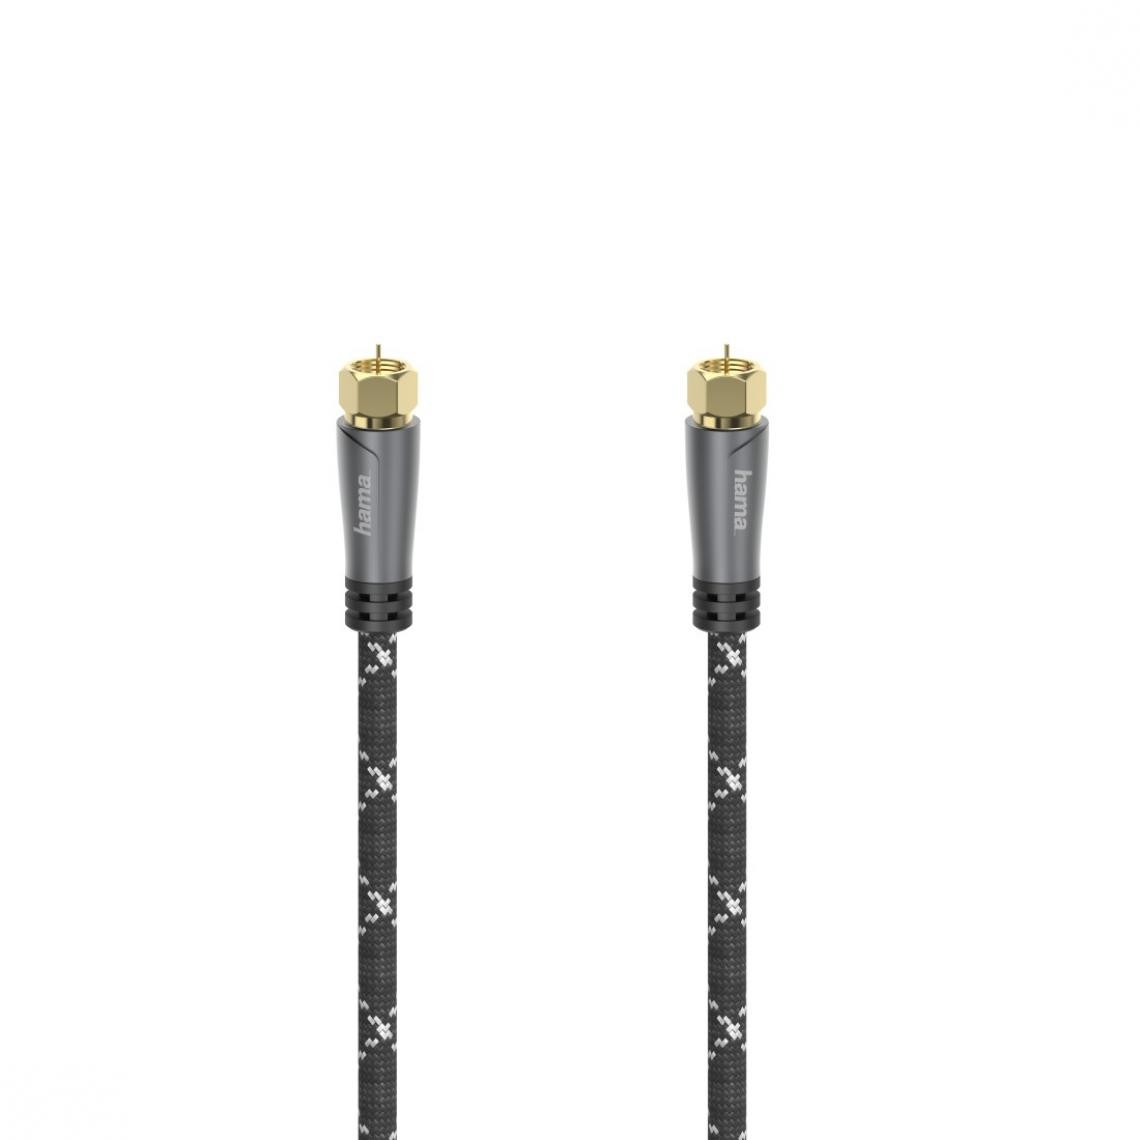 Hama - Cble de raccord SAT, f. mle F - f. mle F, métal, doré, 3,0 m, 120dB - Câble antenne